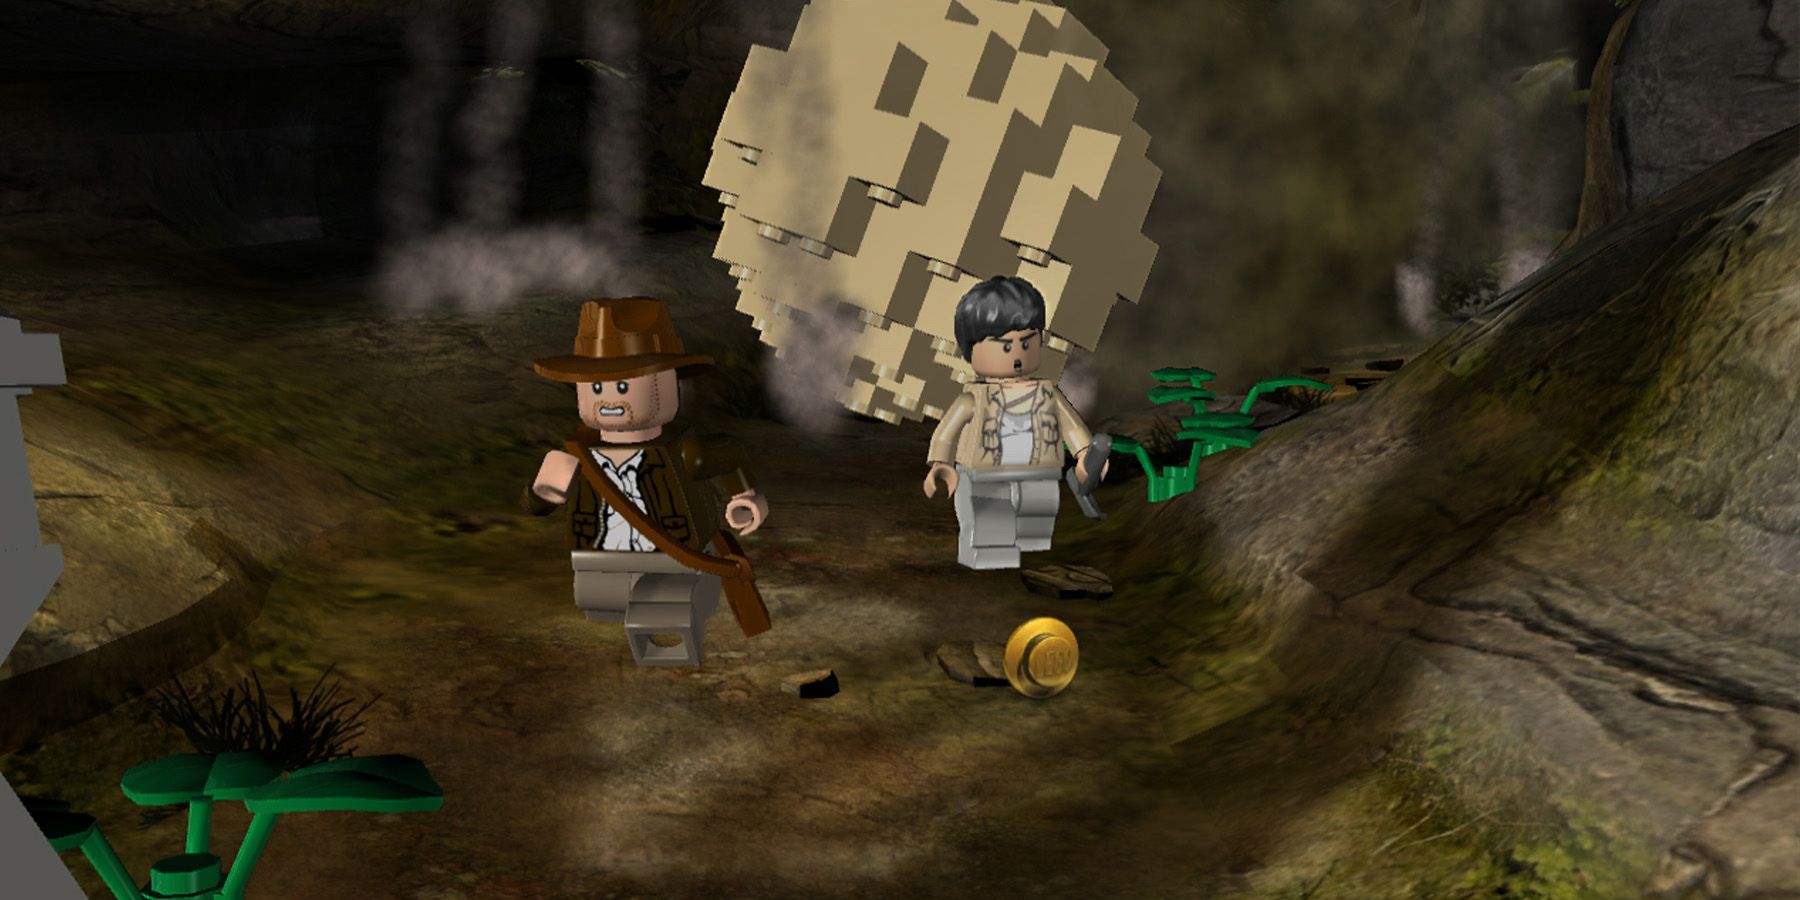 Indiana Jones and a partner escape a rolling boulder